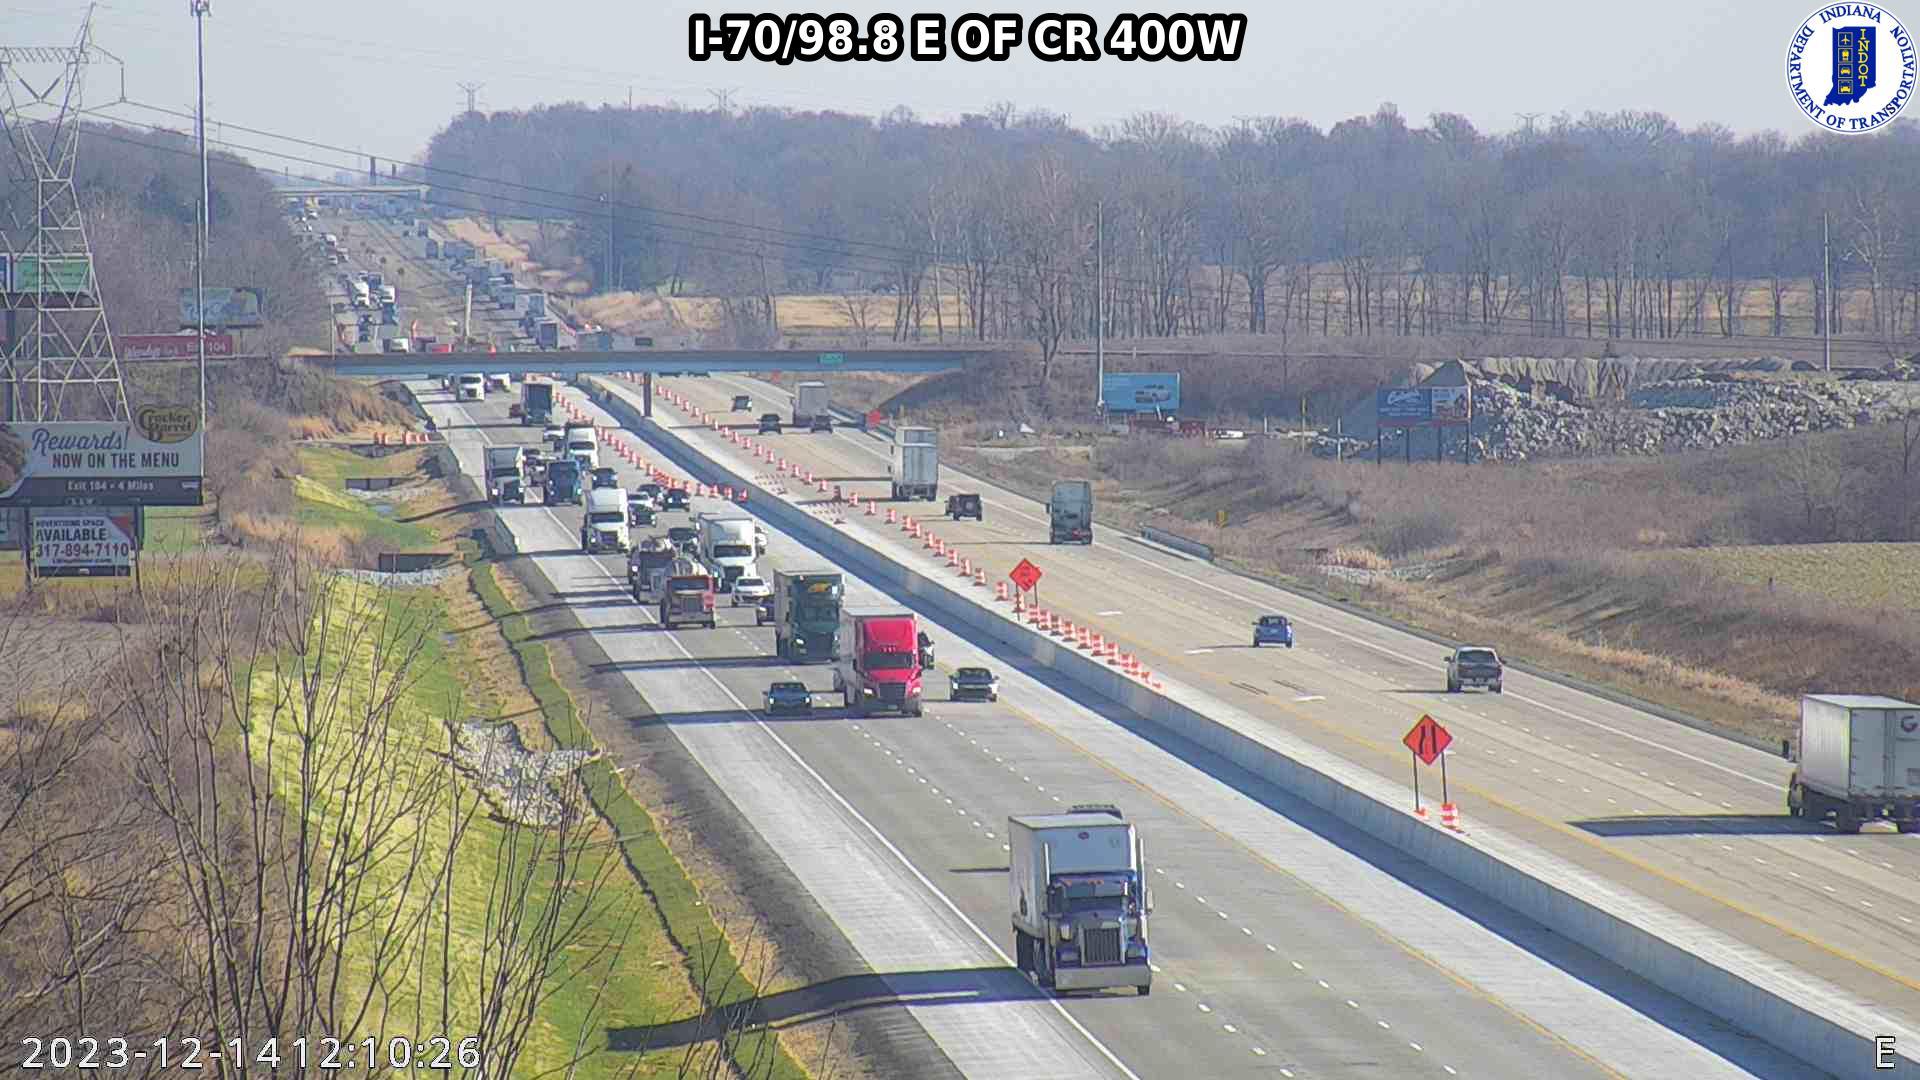 Mohawk: I-70: I-70/98.8 E OF CR 400W Traffic Camera